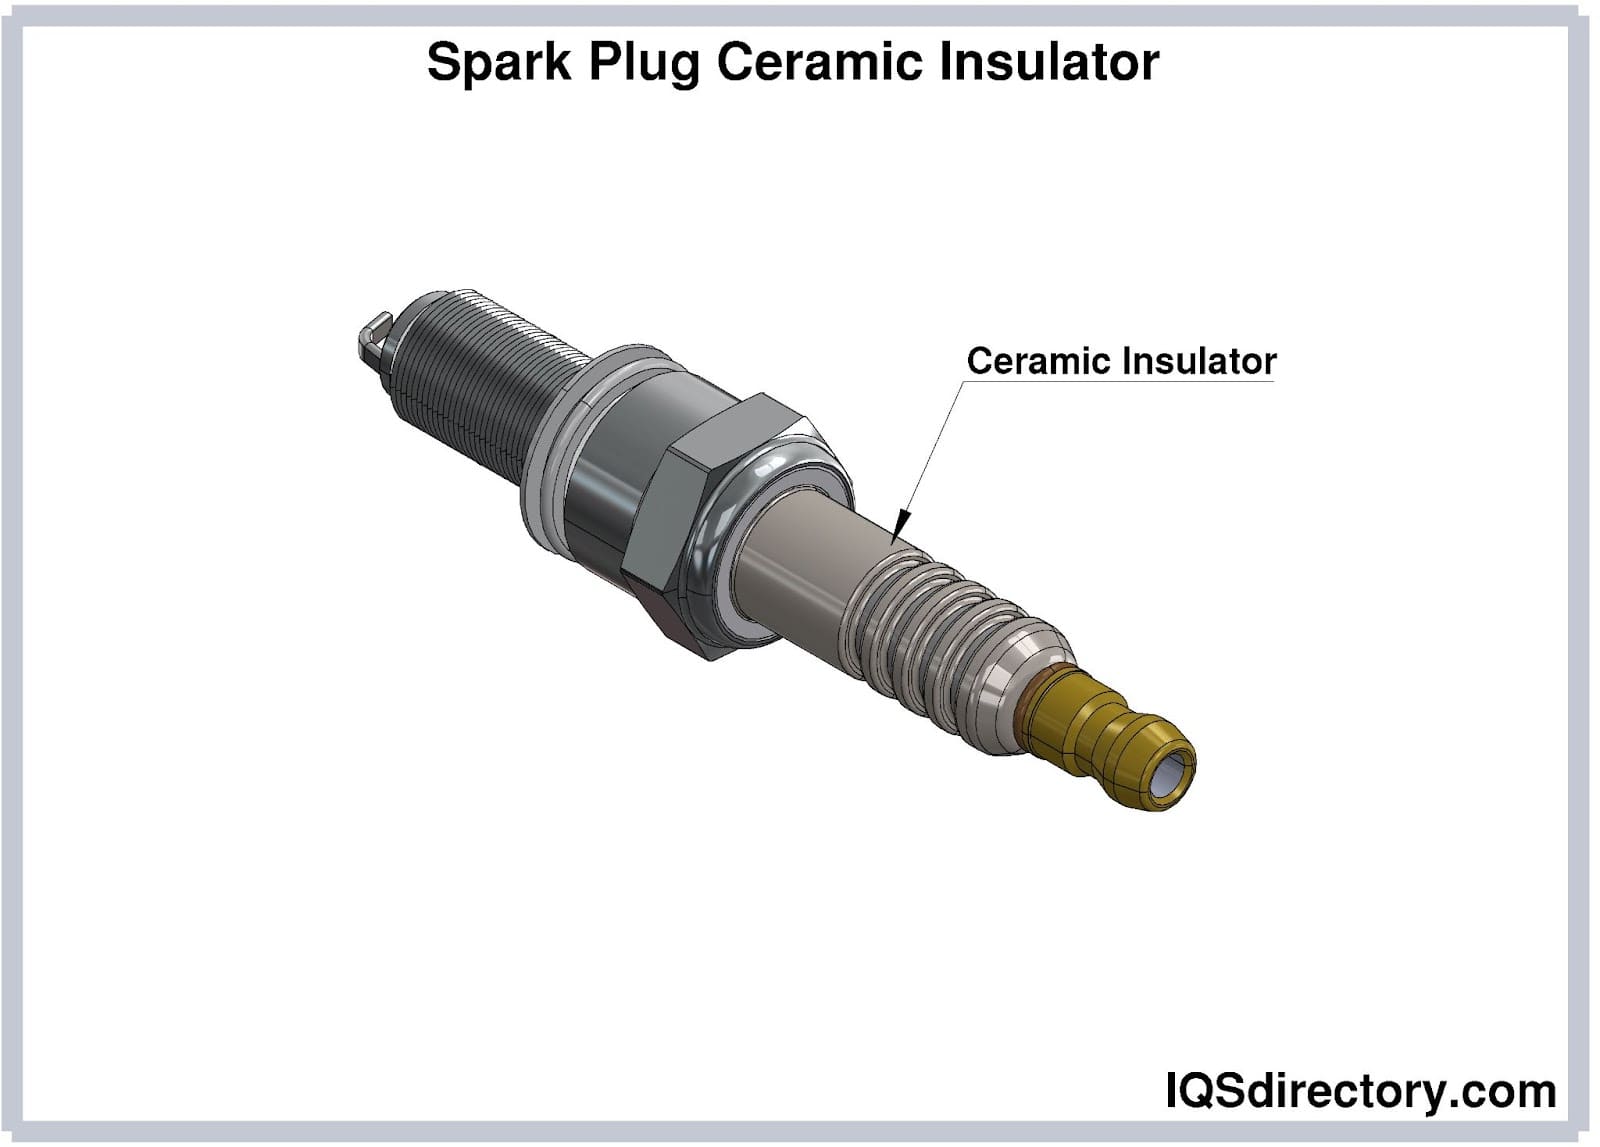 Spark Plug Ceramic Insulator